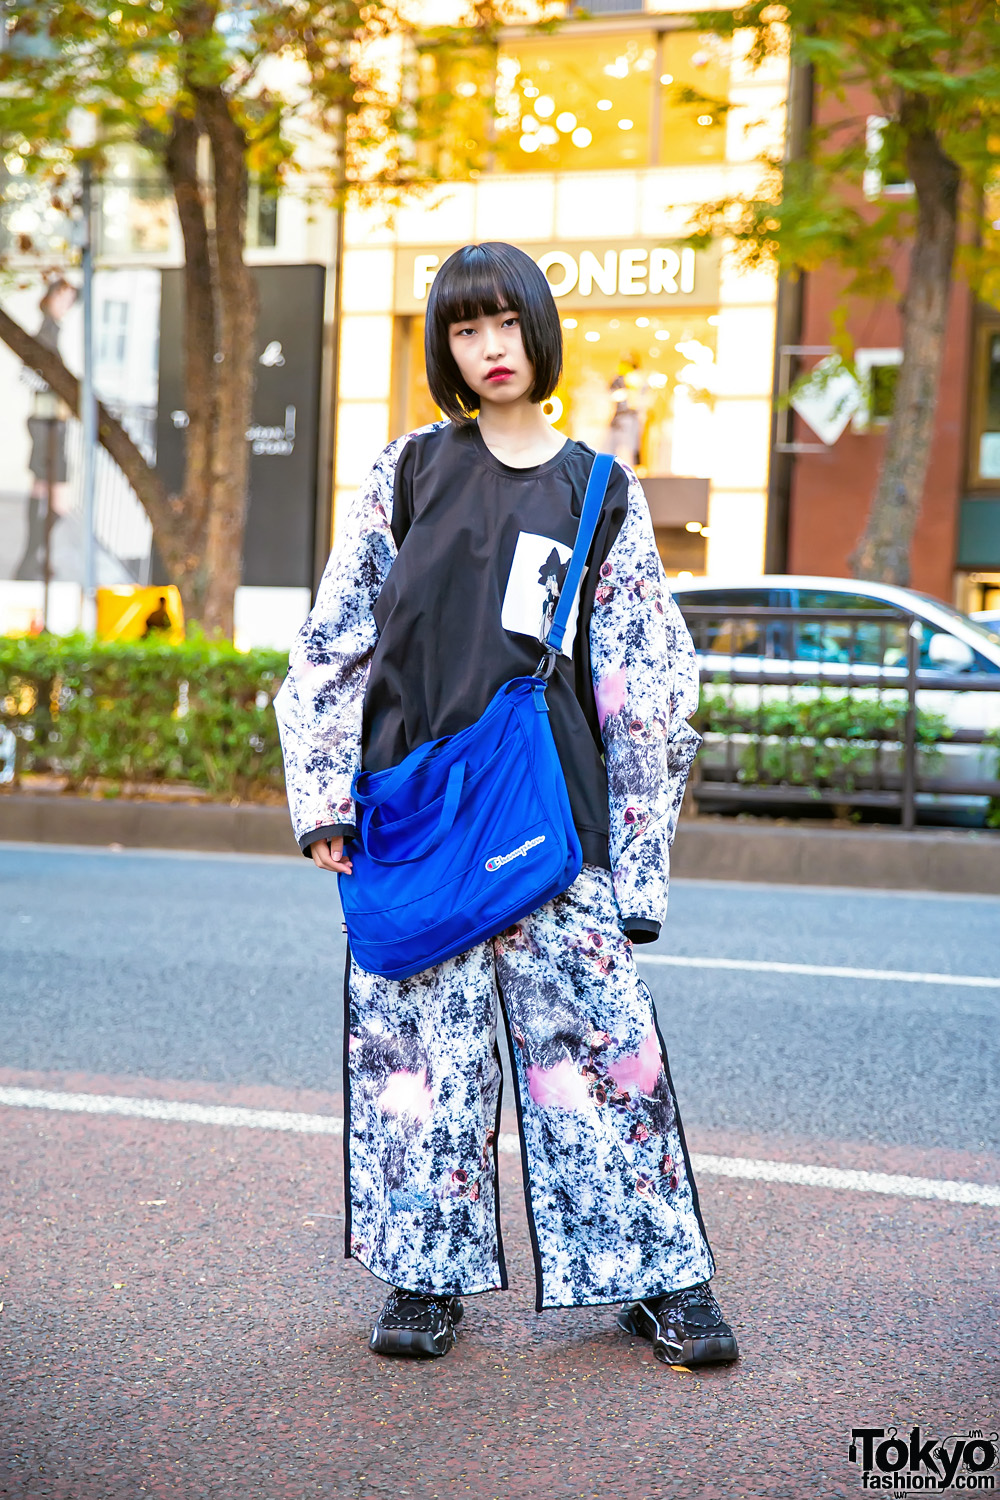 Harajuku Girl in Balmung Japan Street Style w/ Anti Old School Sneakers & Champion Bag